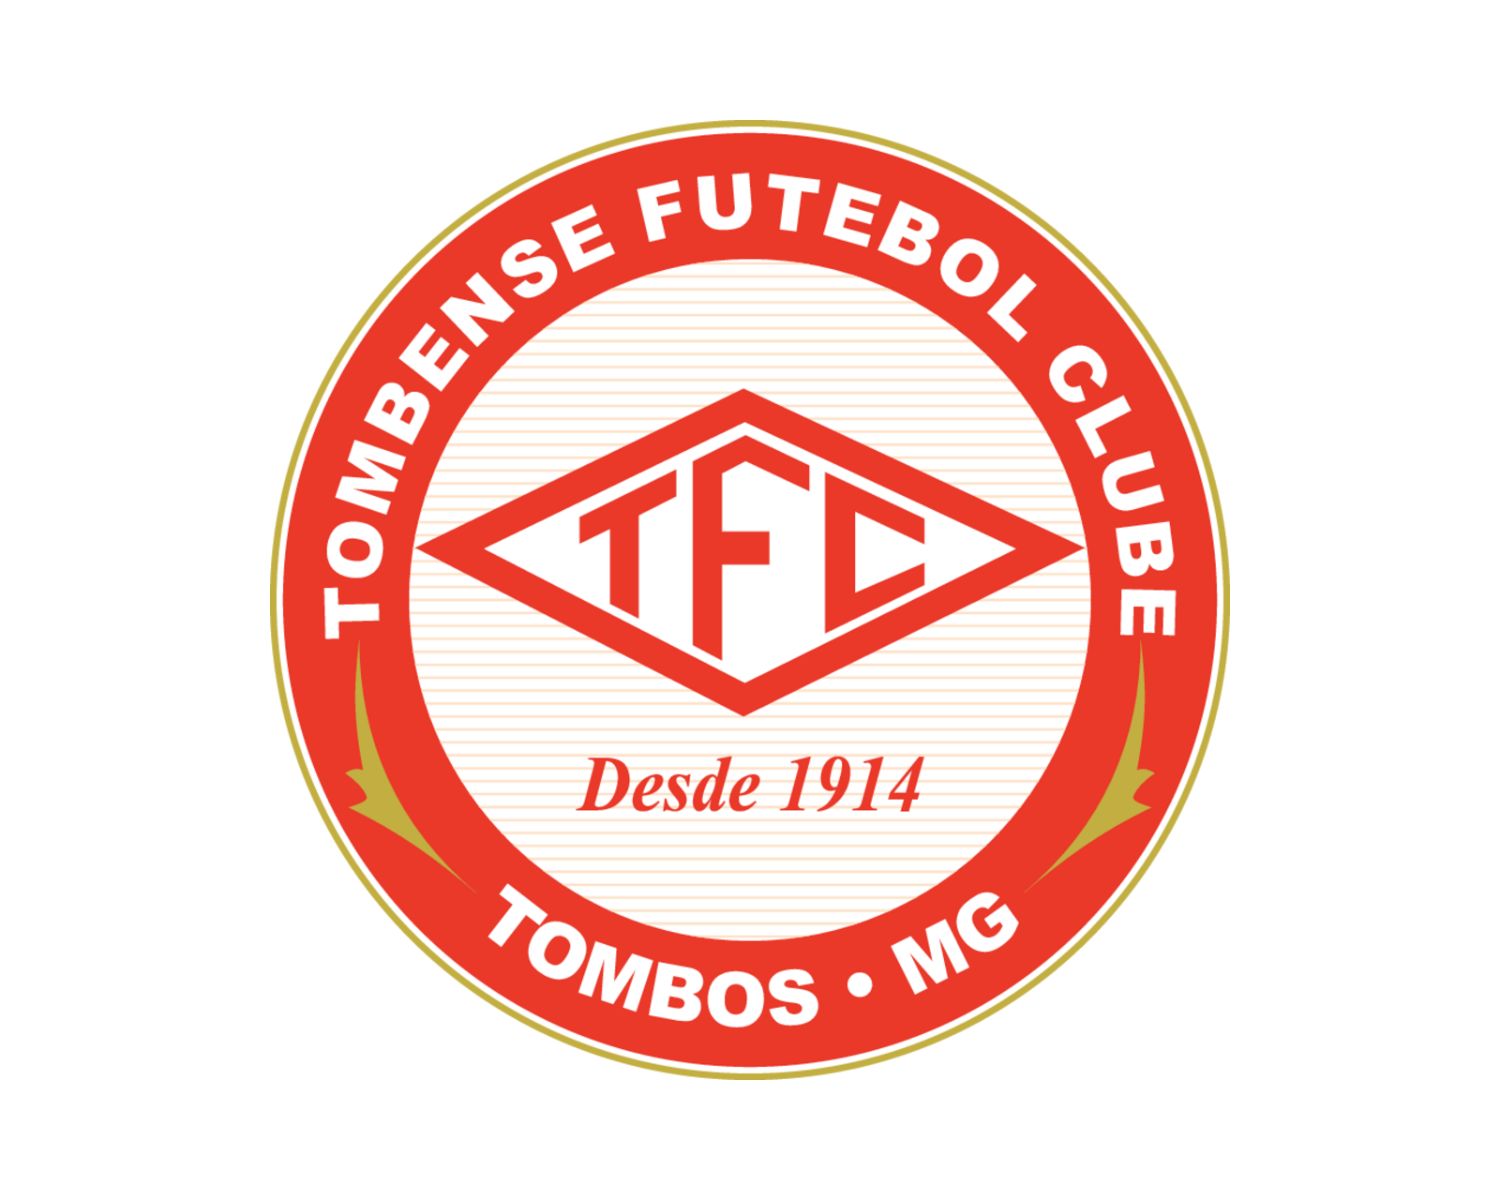 tombense-futebol-clube-12-football-club-facts